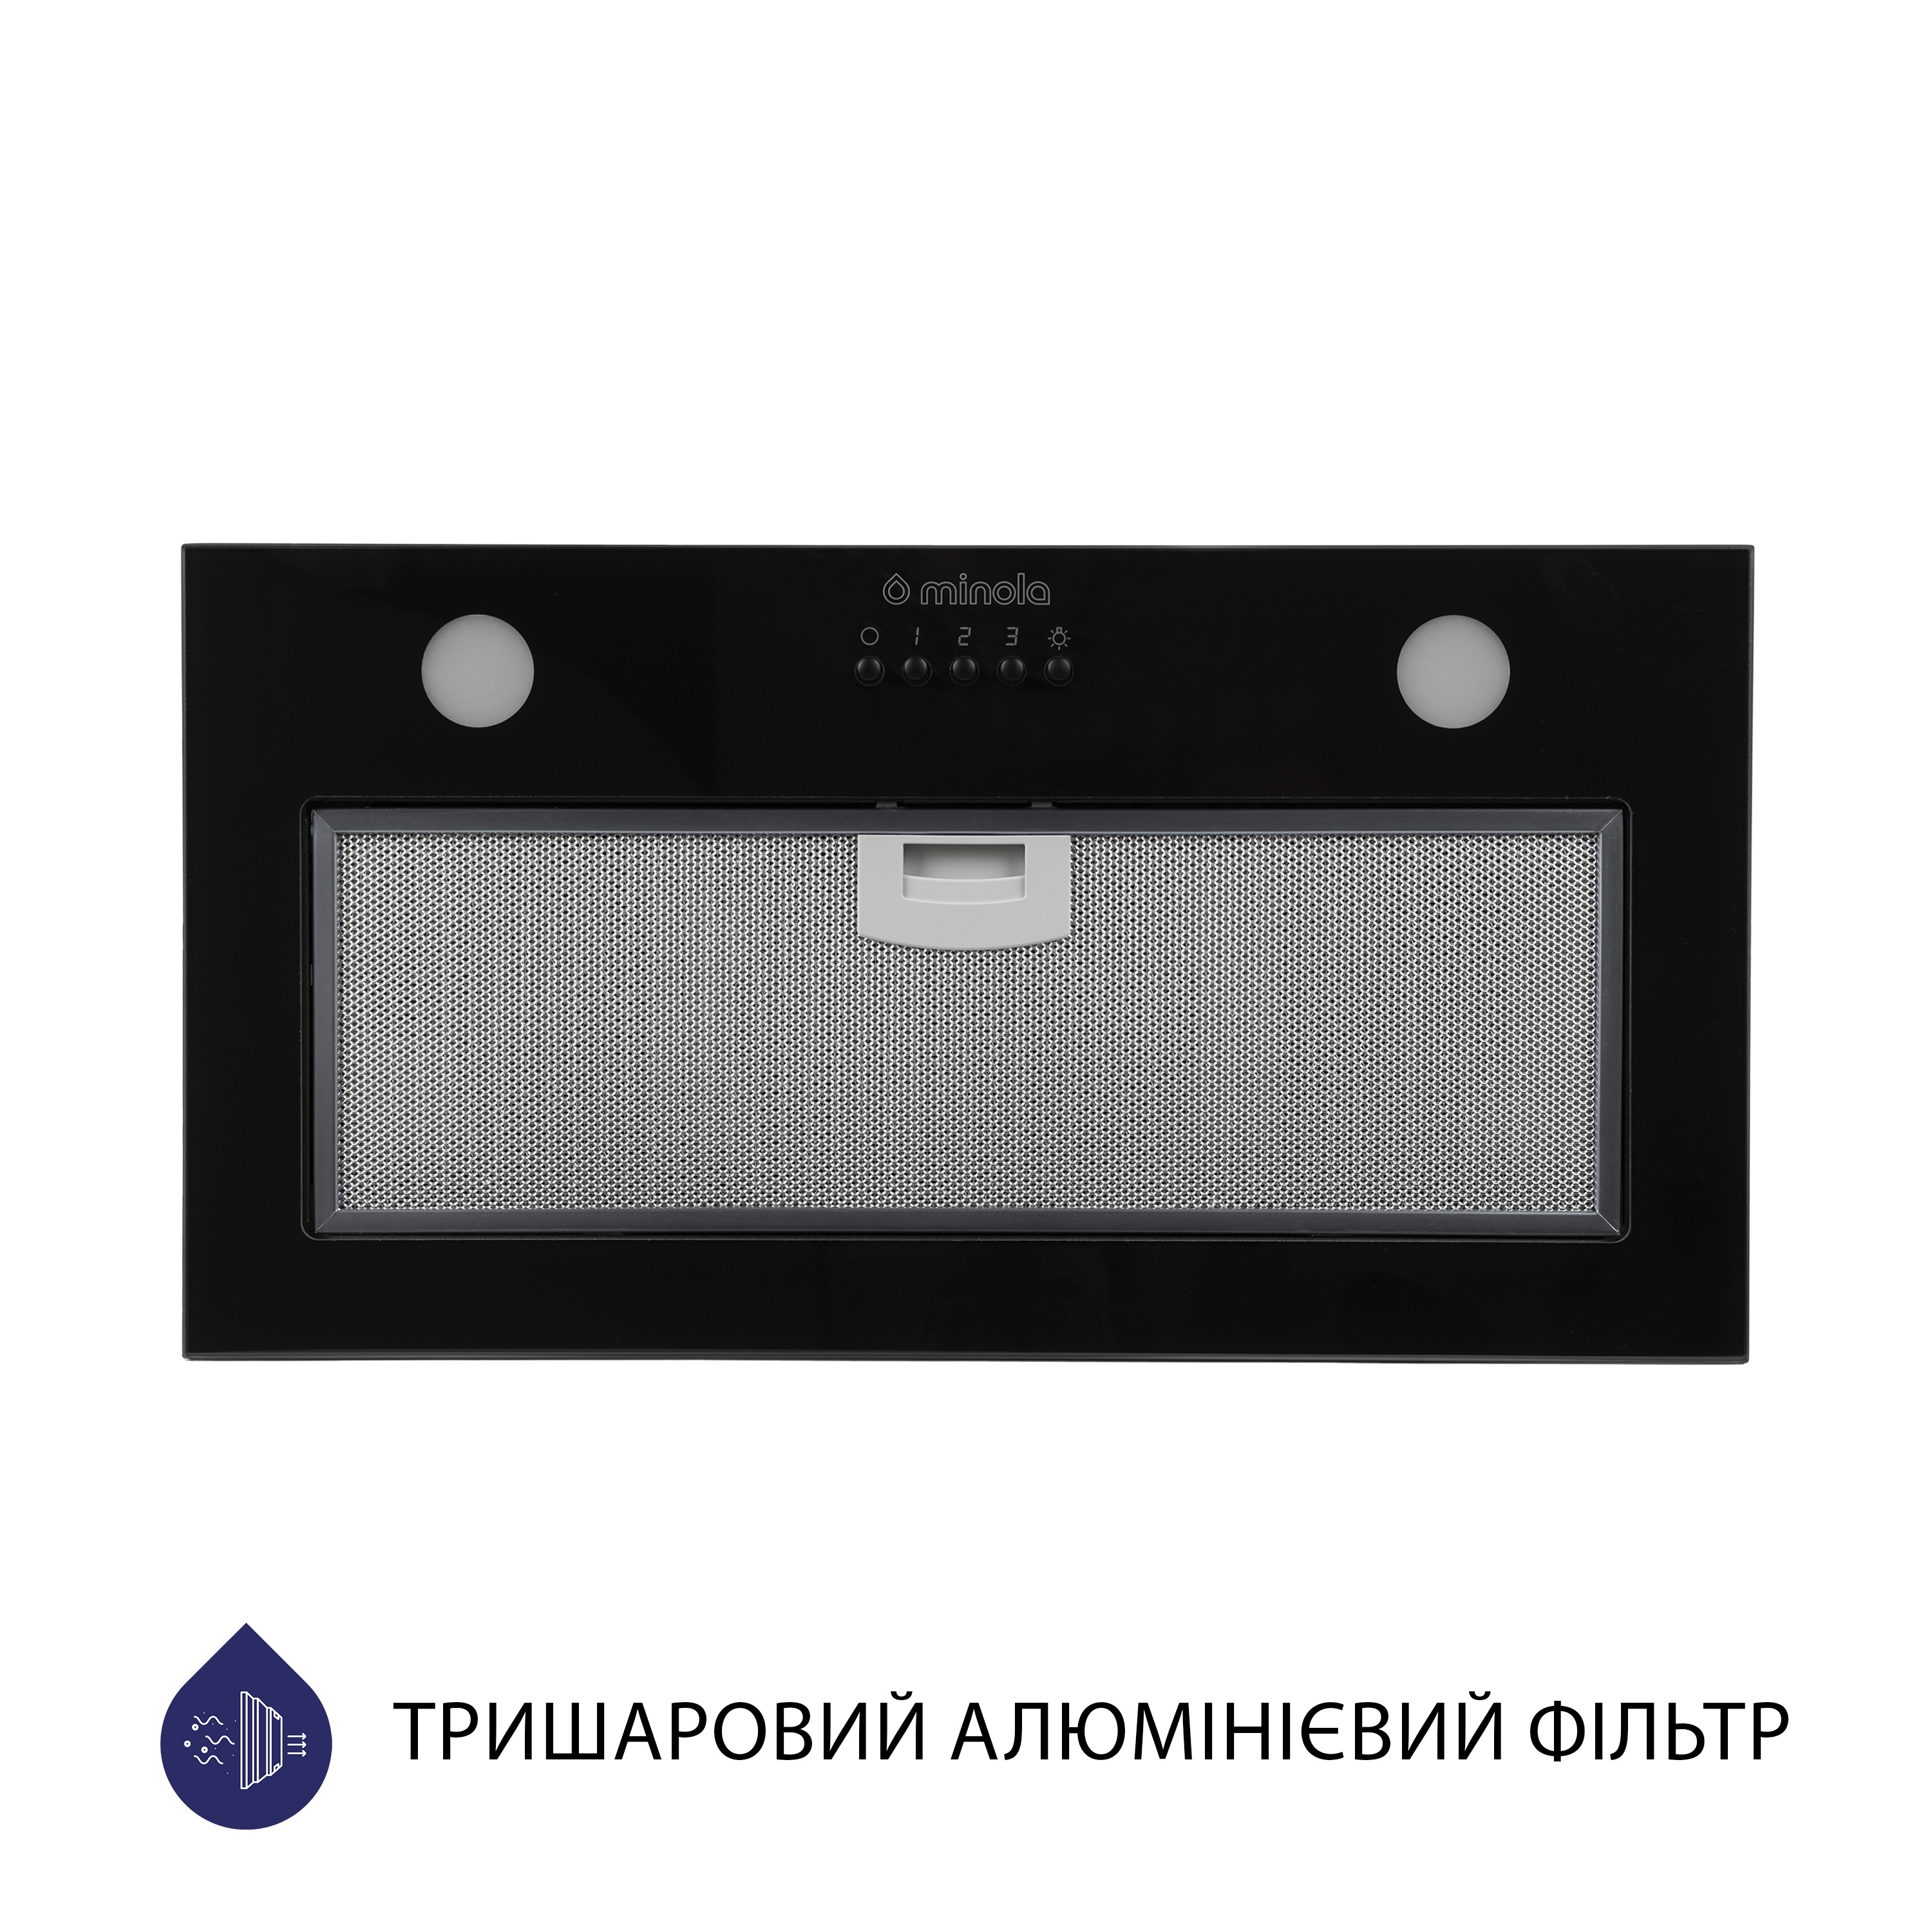 Витяжка кухонная полновстраиваемая Minola HBI 52621 BL GLASS 700 LED цена 4599.00 грн - фотография 2